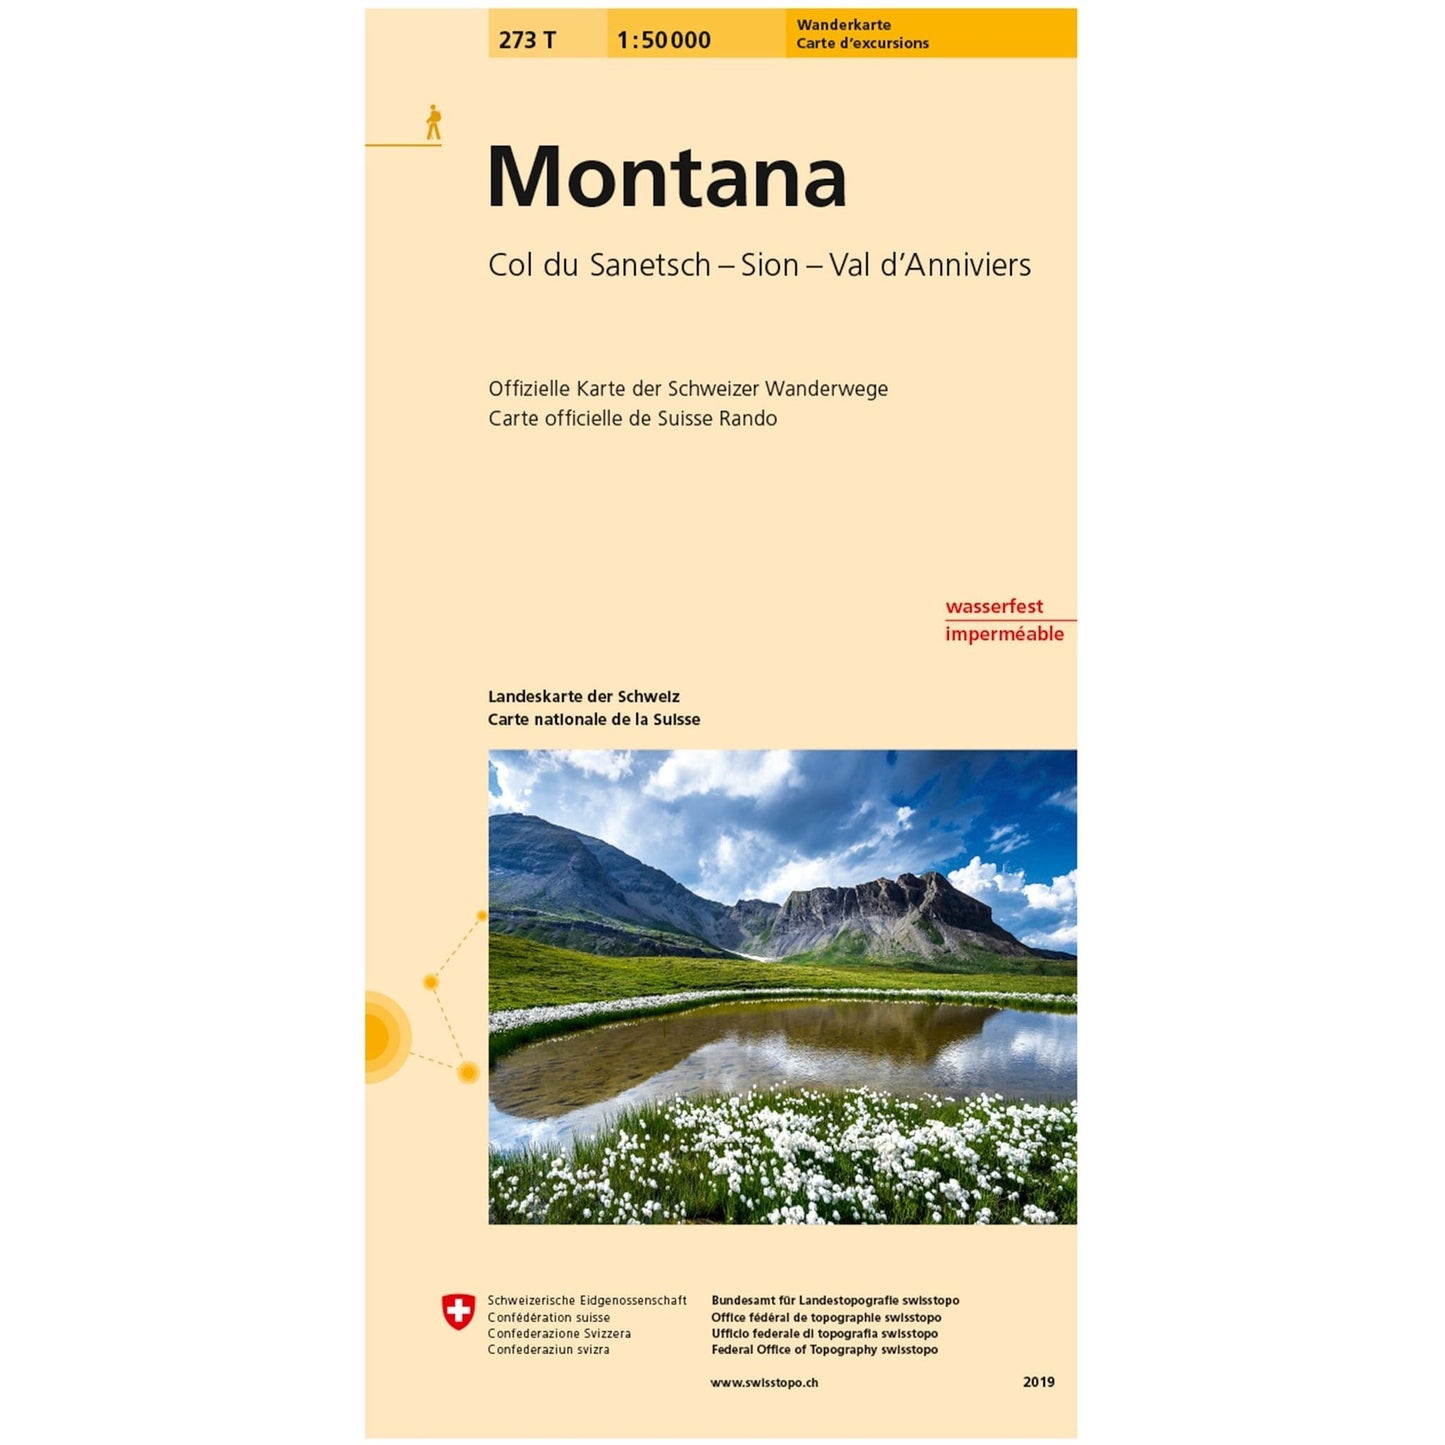 Wanderkarten Swiss Topo 1:50000 Wanderkarten Swisstopo 273T Montana 